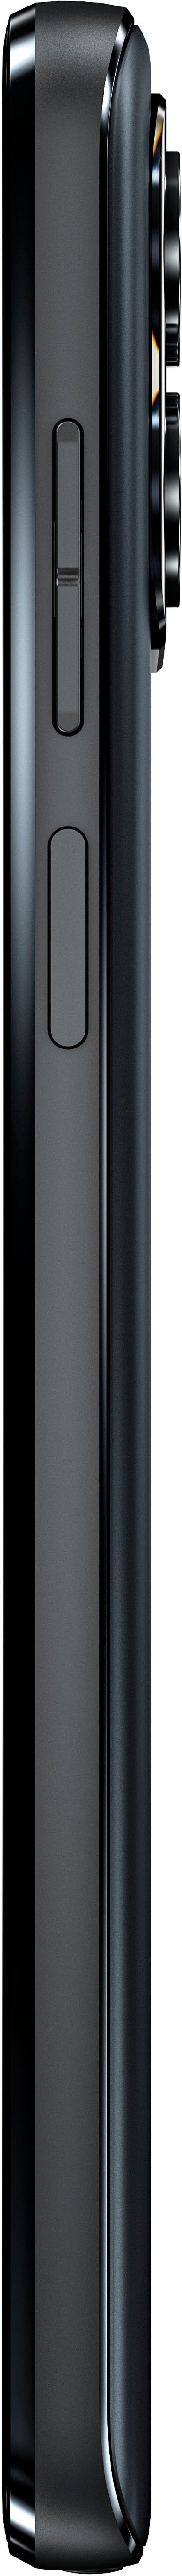 Motorola - moto g stylus 5G 2023 256GB (Unlocked) - Cosmic Black_9